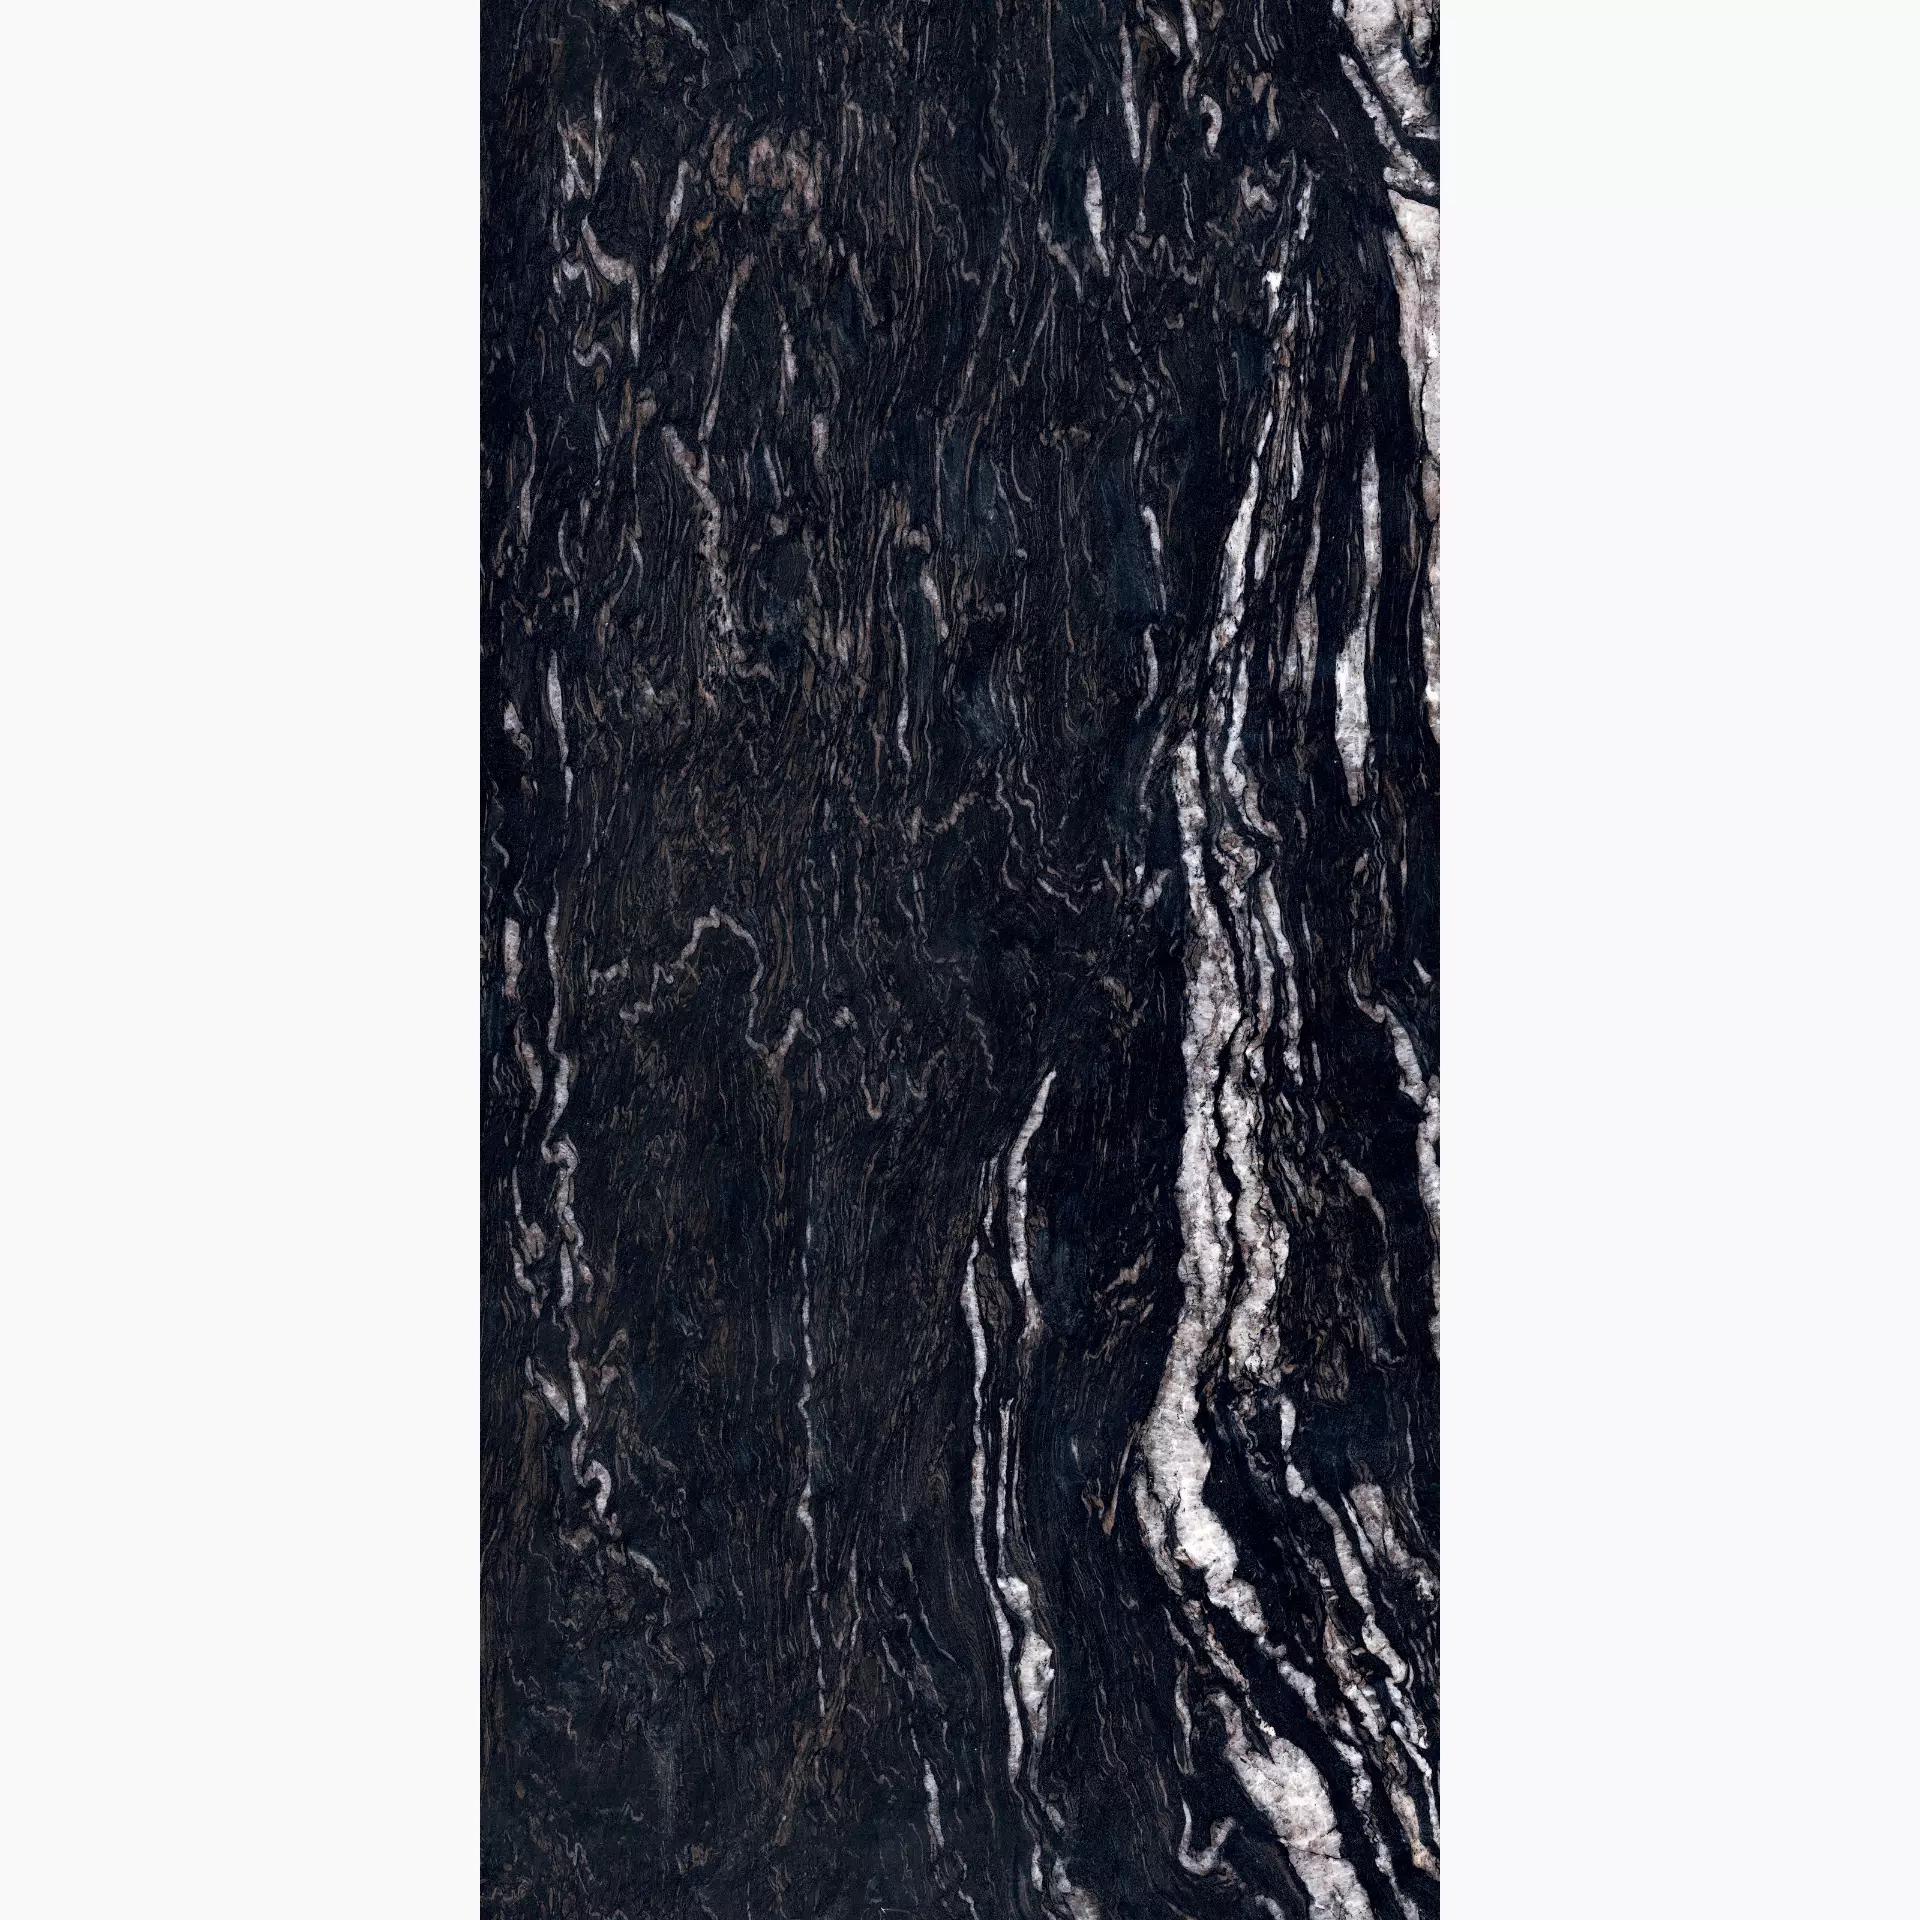 ABK Sensi Gems Titanium Black Lux + PF60005341 60x120cm rectified 8,5mm